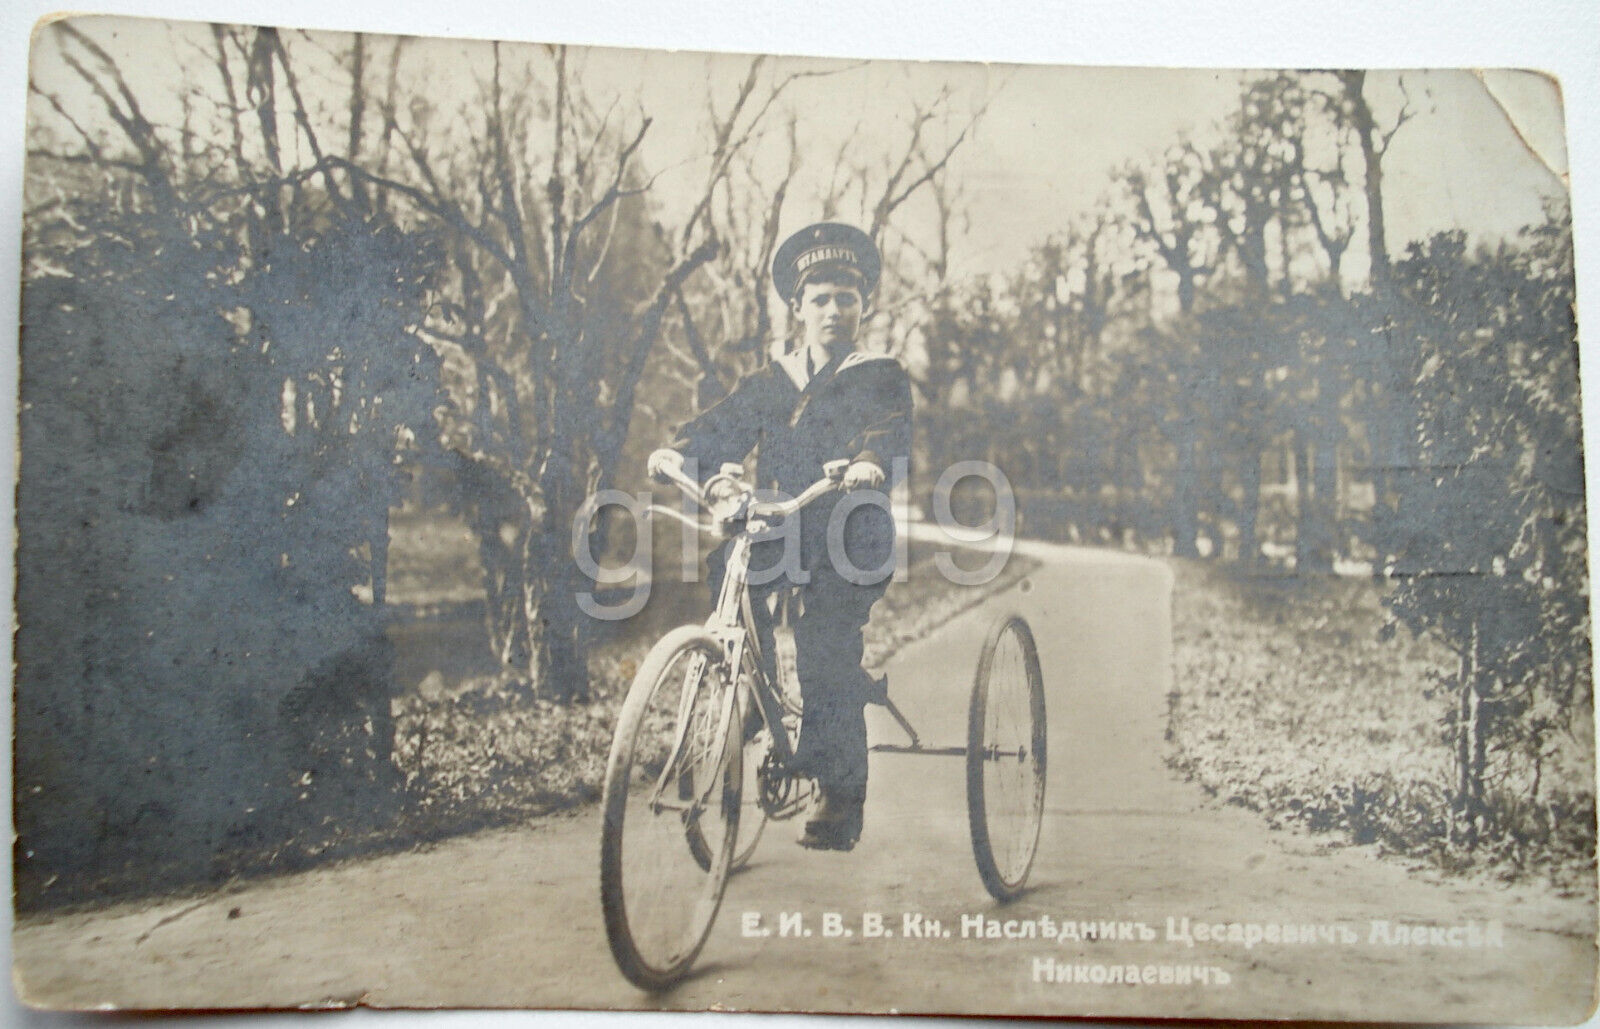 Alexei Tsarevich of Russia on Tricycle Sailor Uniform Son of Nicholas II